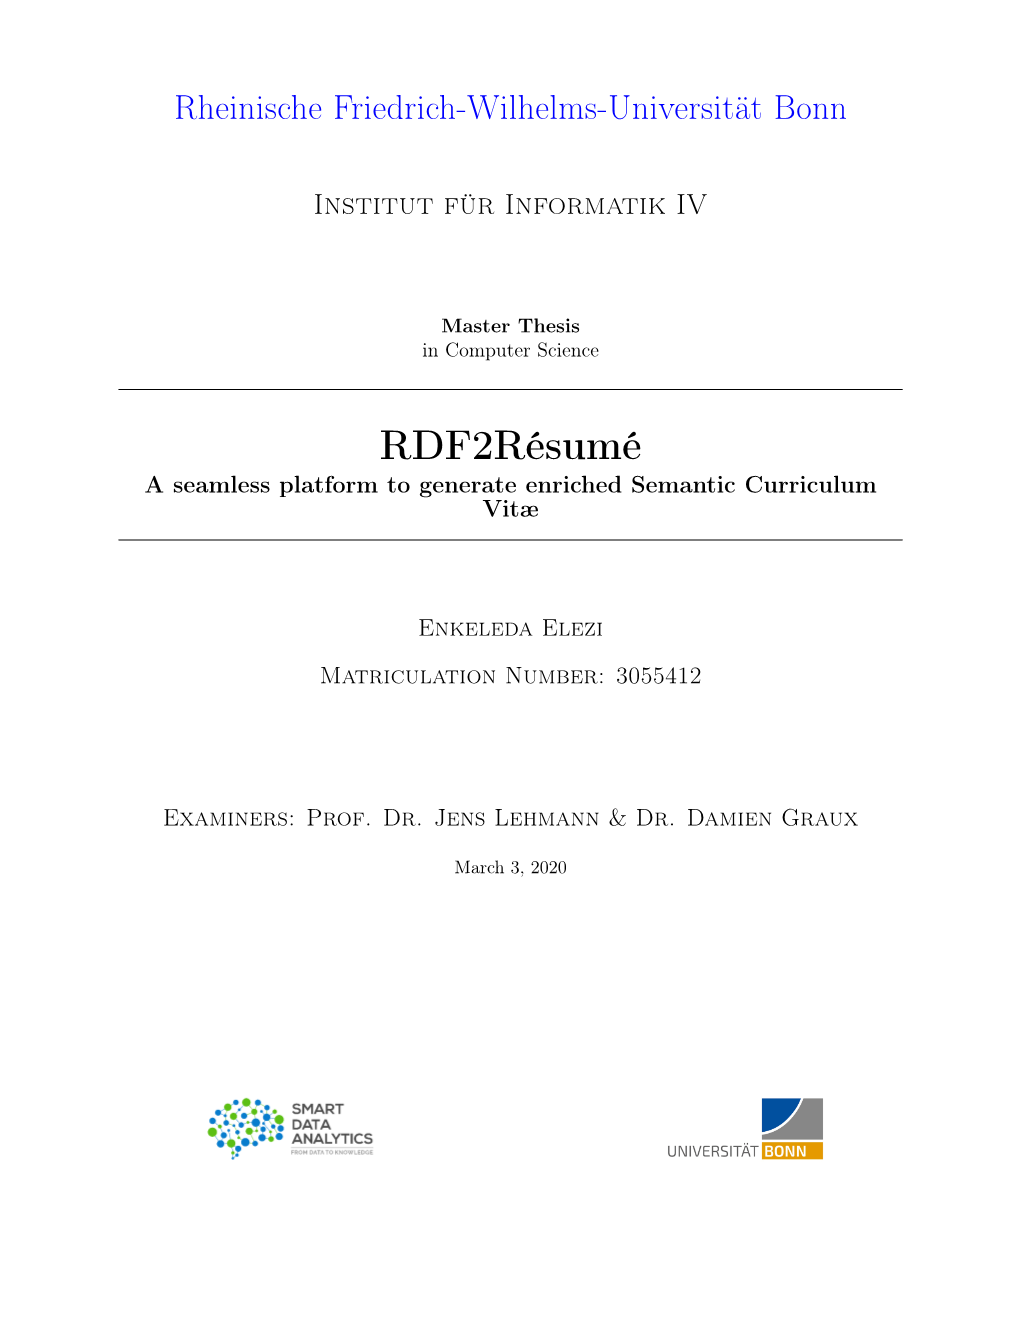 Rdf2résumé a Seamless Platform to Generate Enriched Semantic Curriculum Vitæ